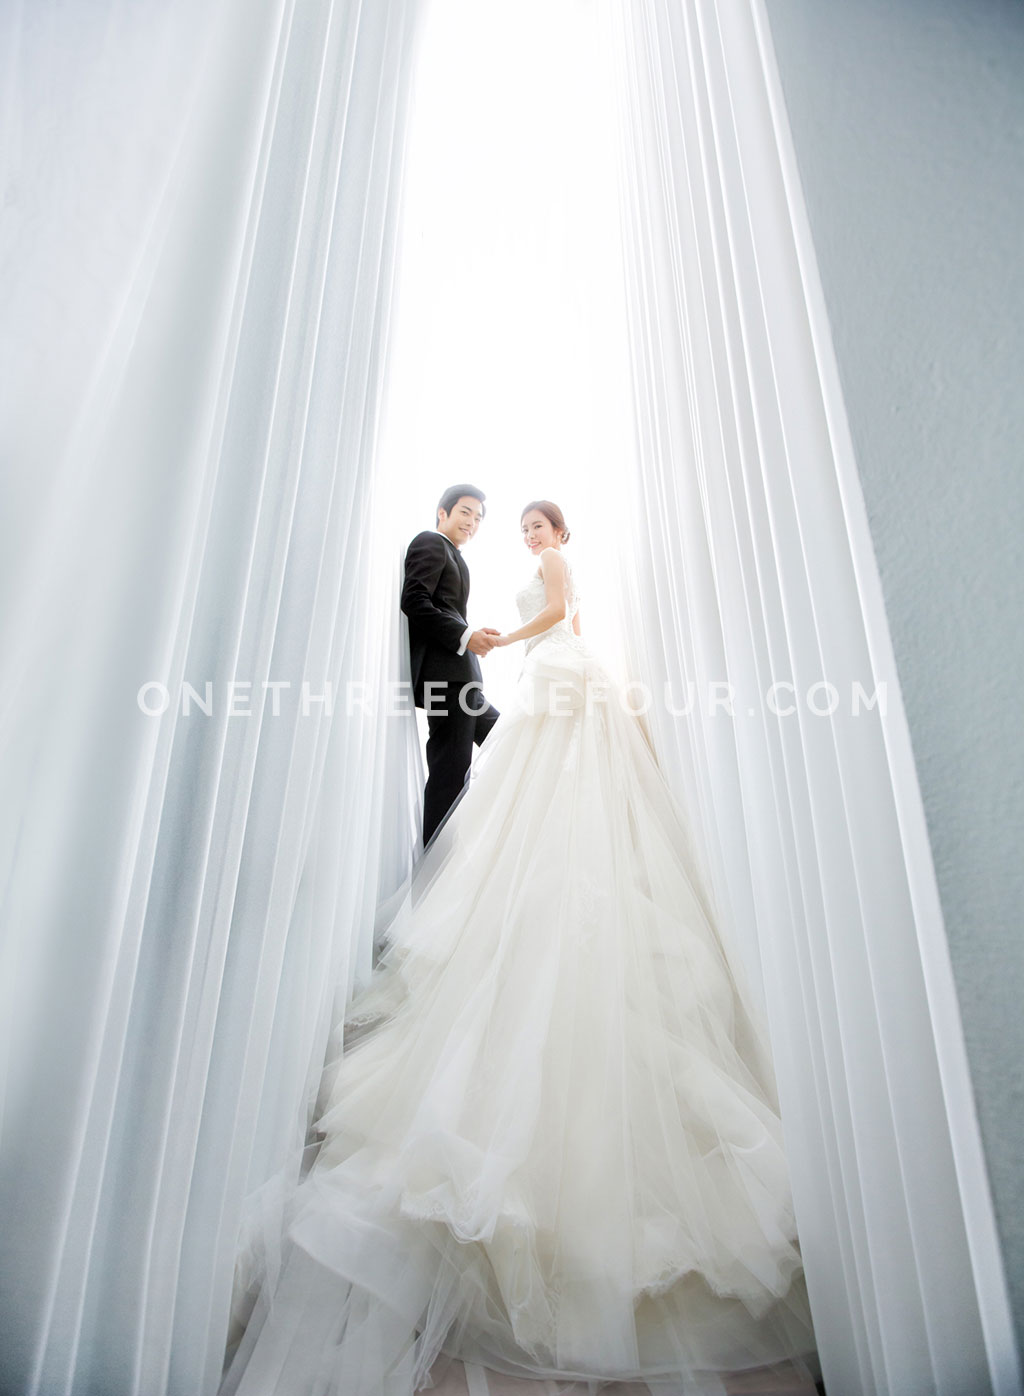 2016 Pre-wedding Photography Sample Part 2 - Prestige by Spazio Studio on OneThreeOneFour 0